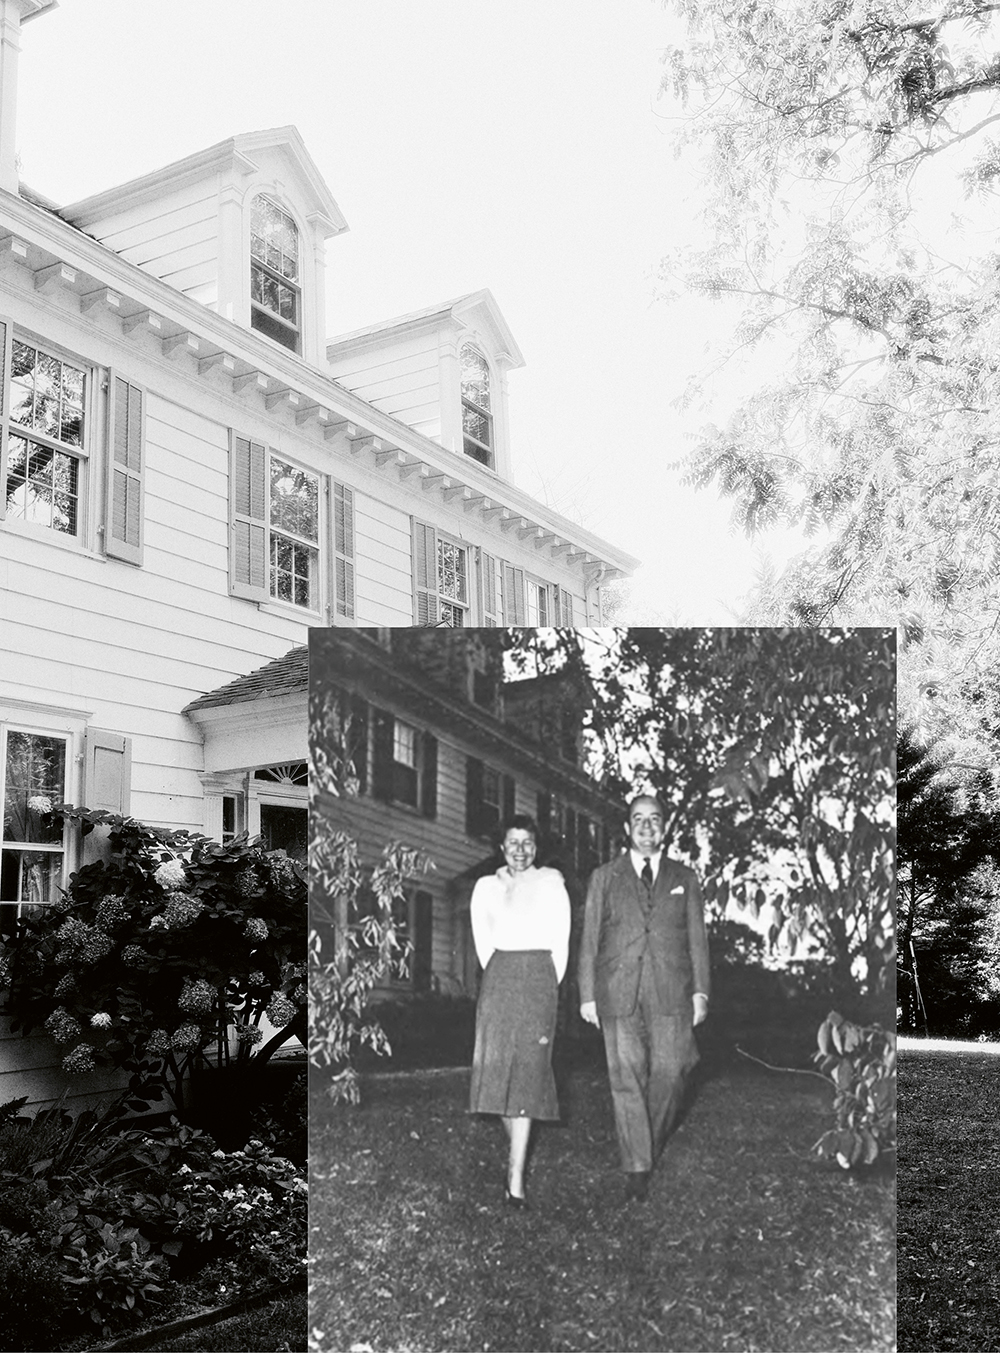 6. Klara and John von Neumann outside their home in Princeton, New Jersey